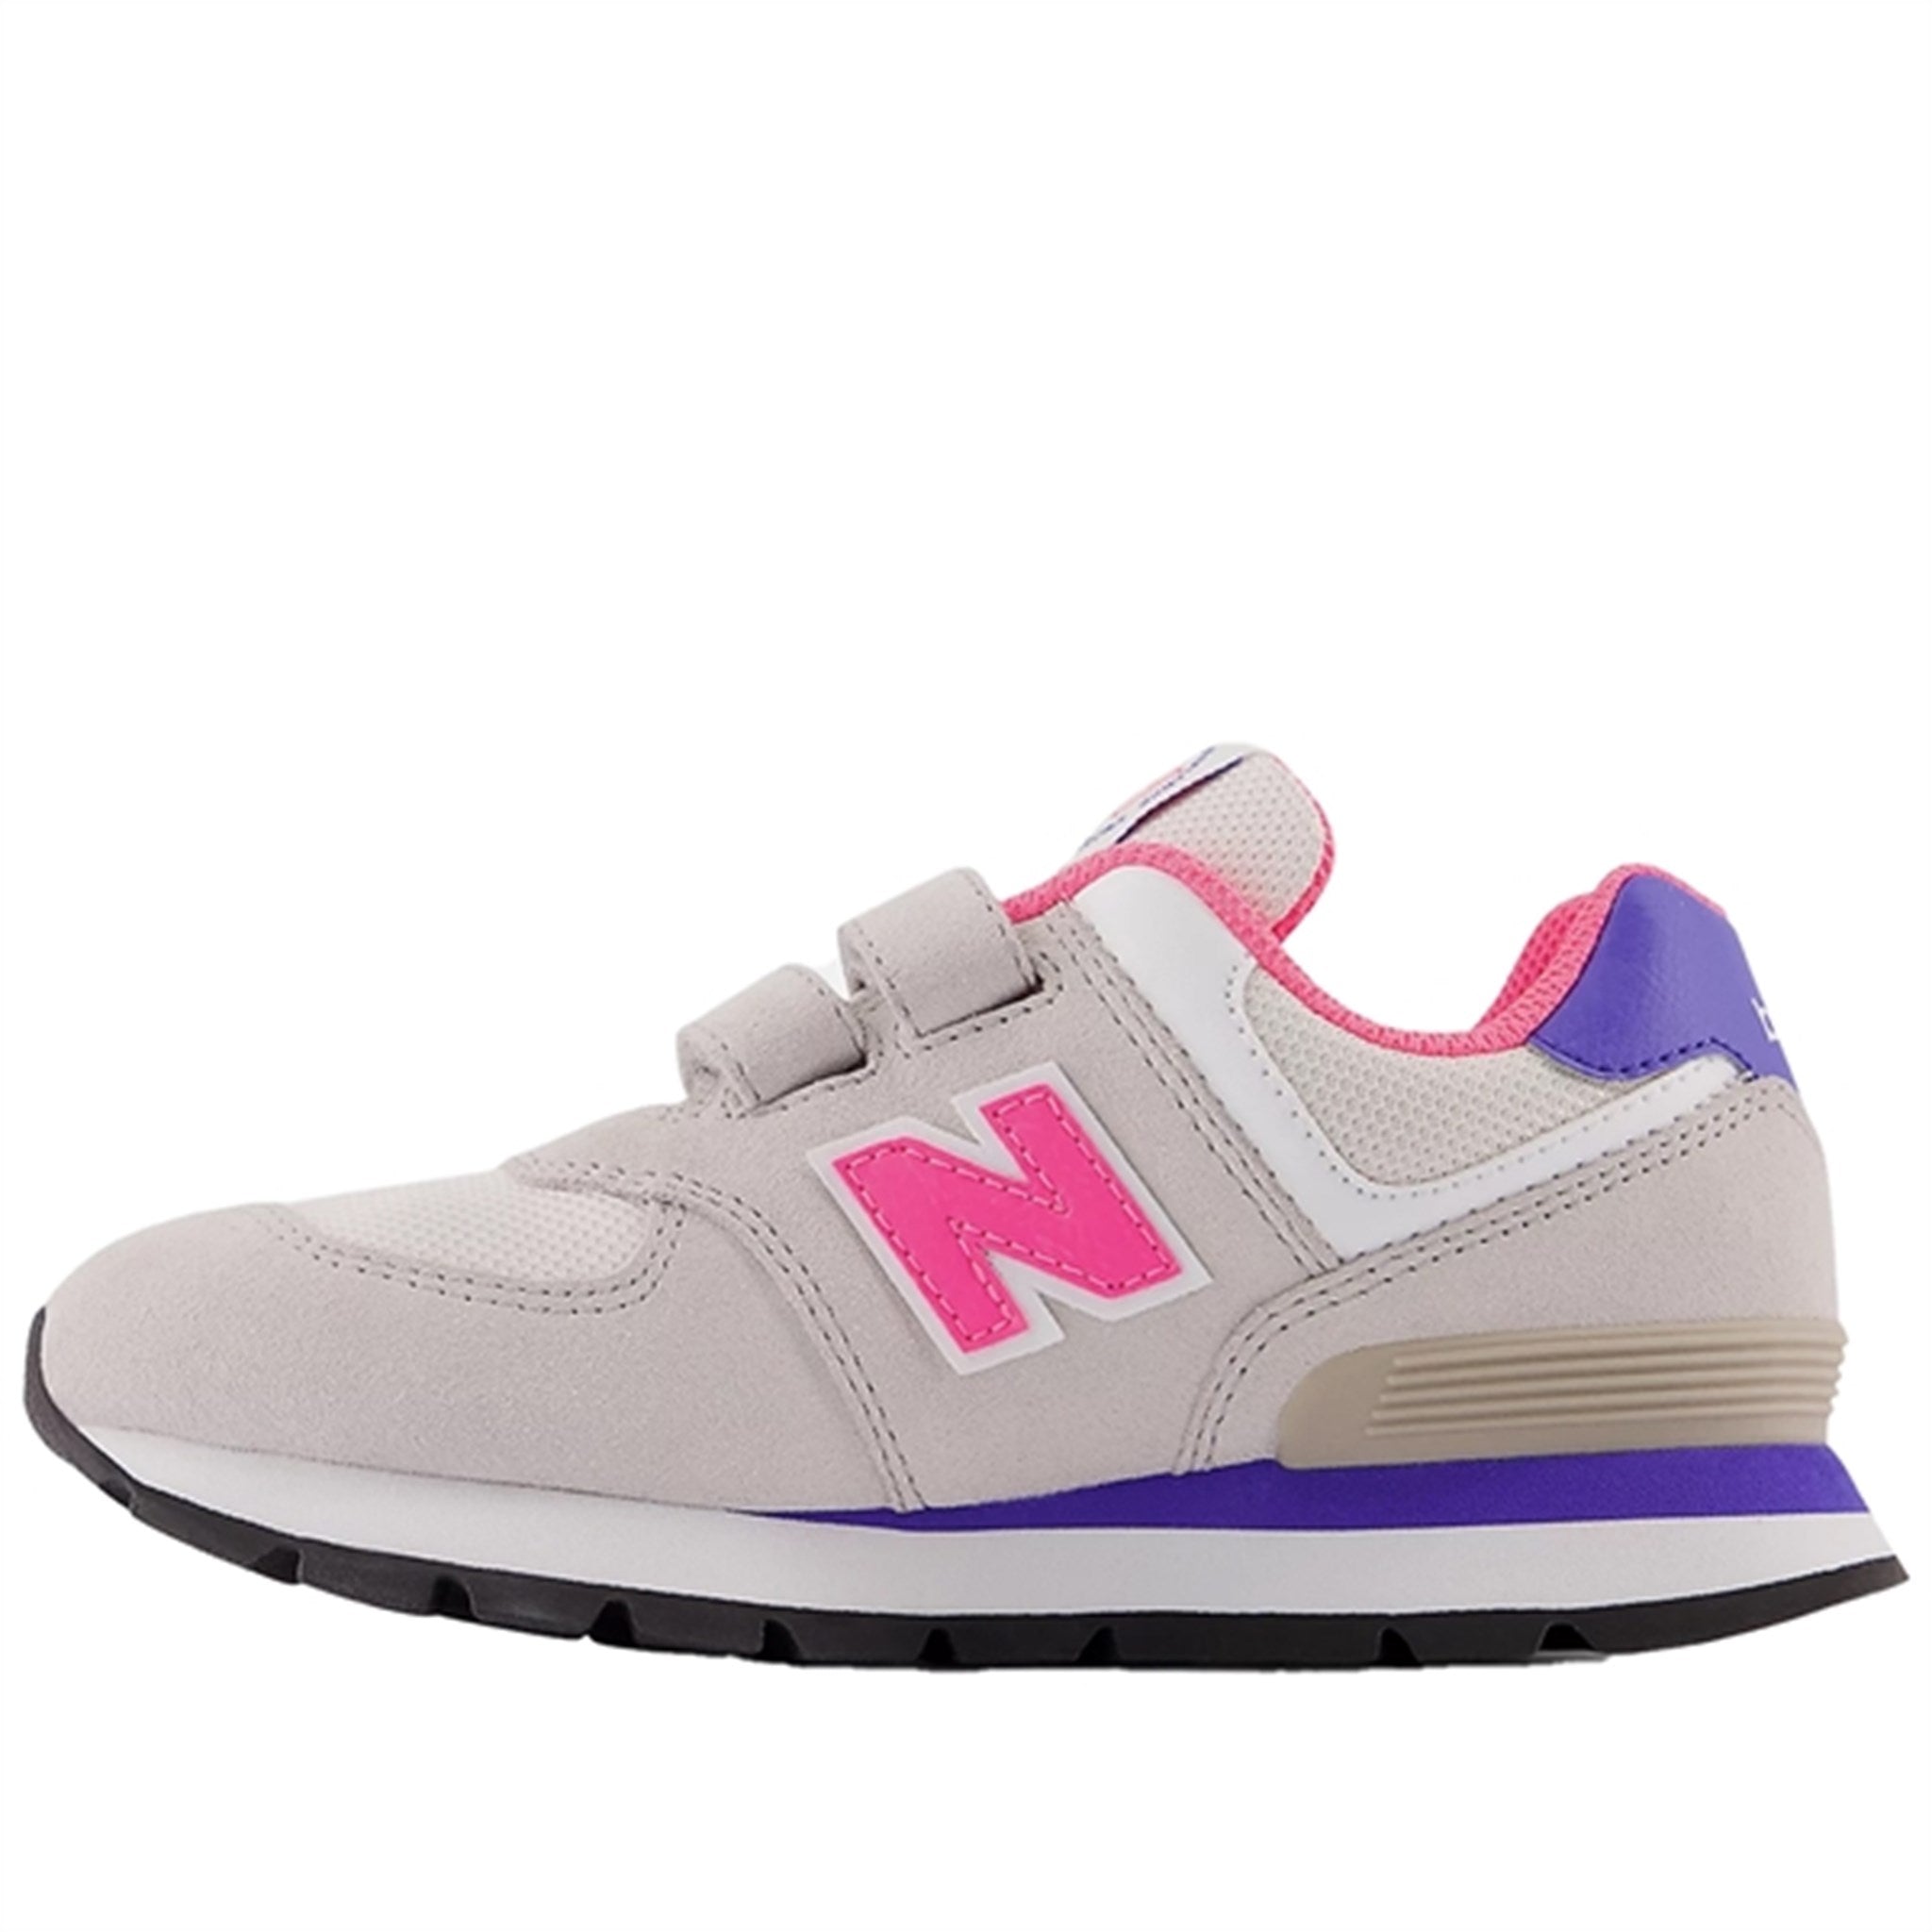 New Balance 574 Summer Fog/Neon Pink Sneakers 3